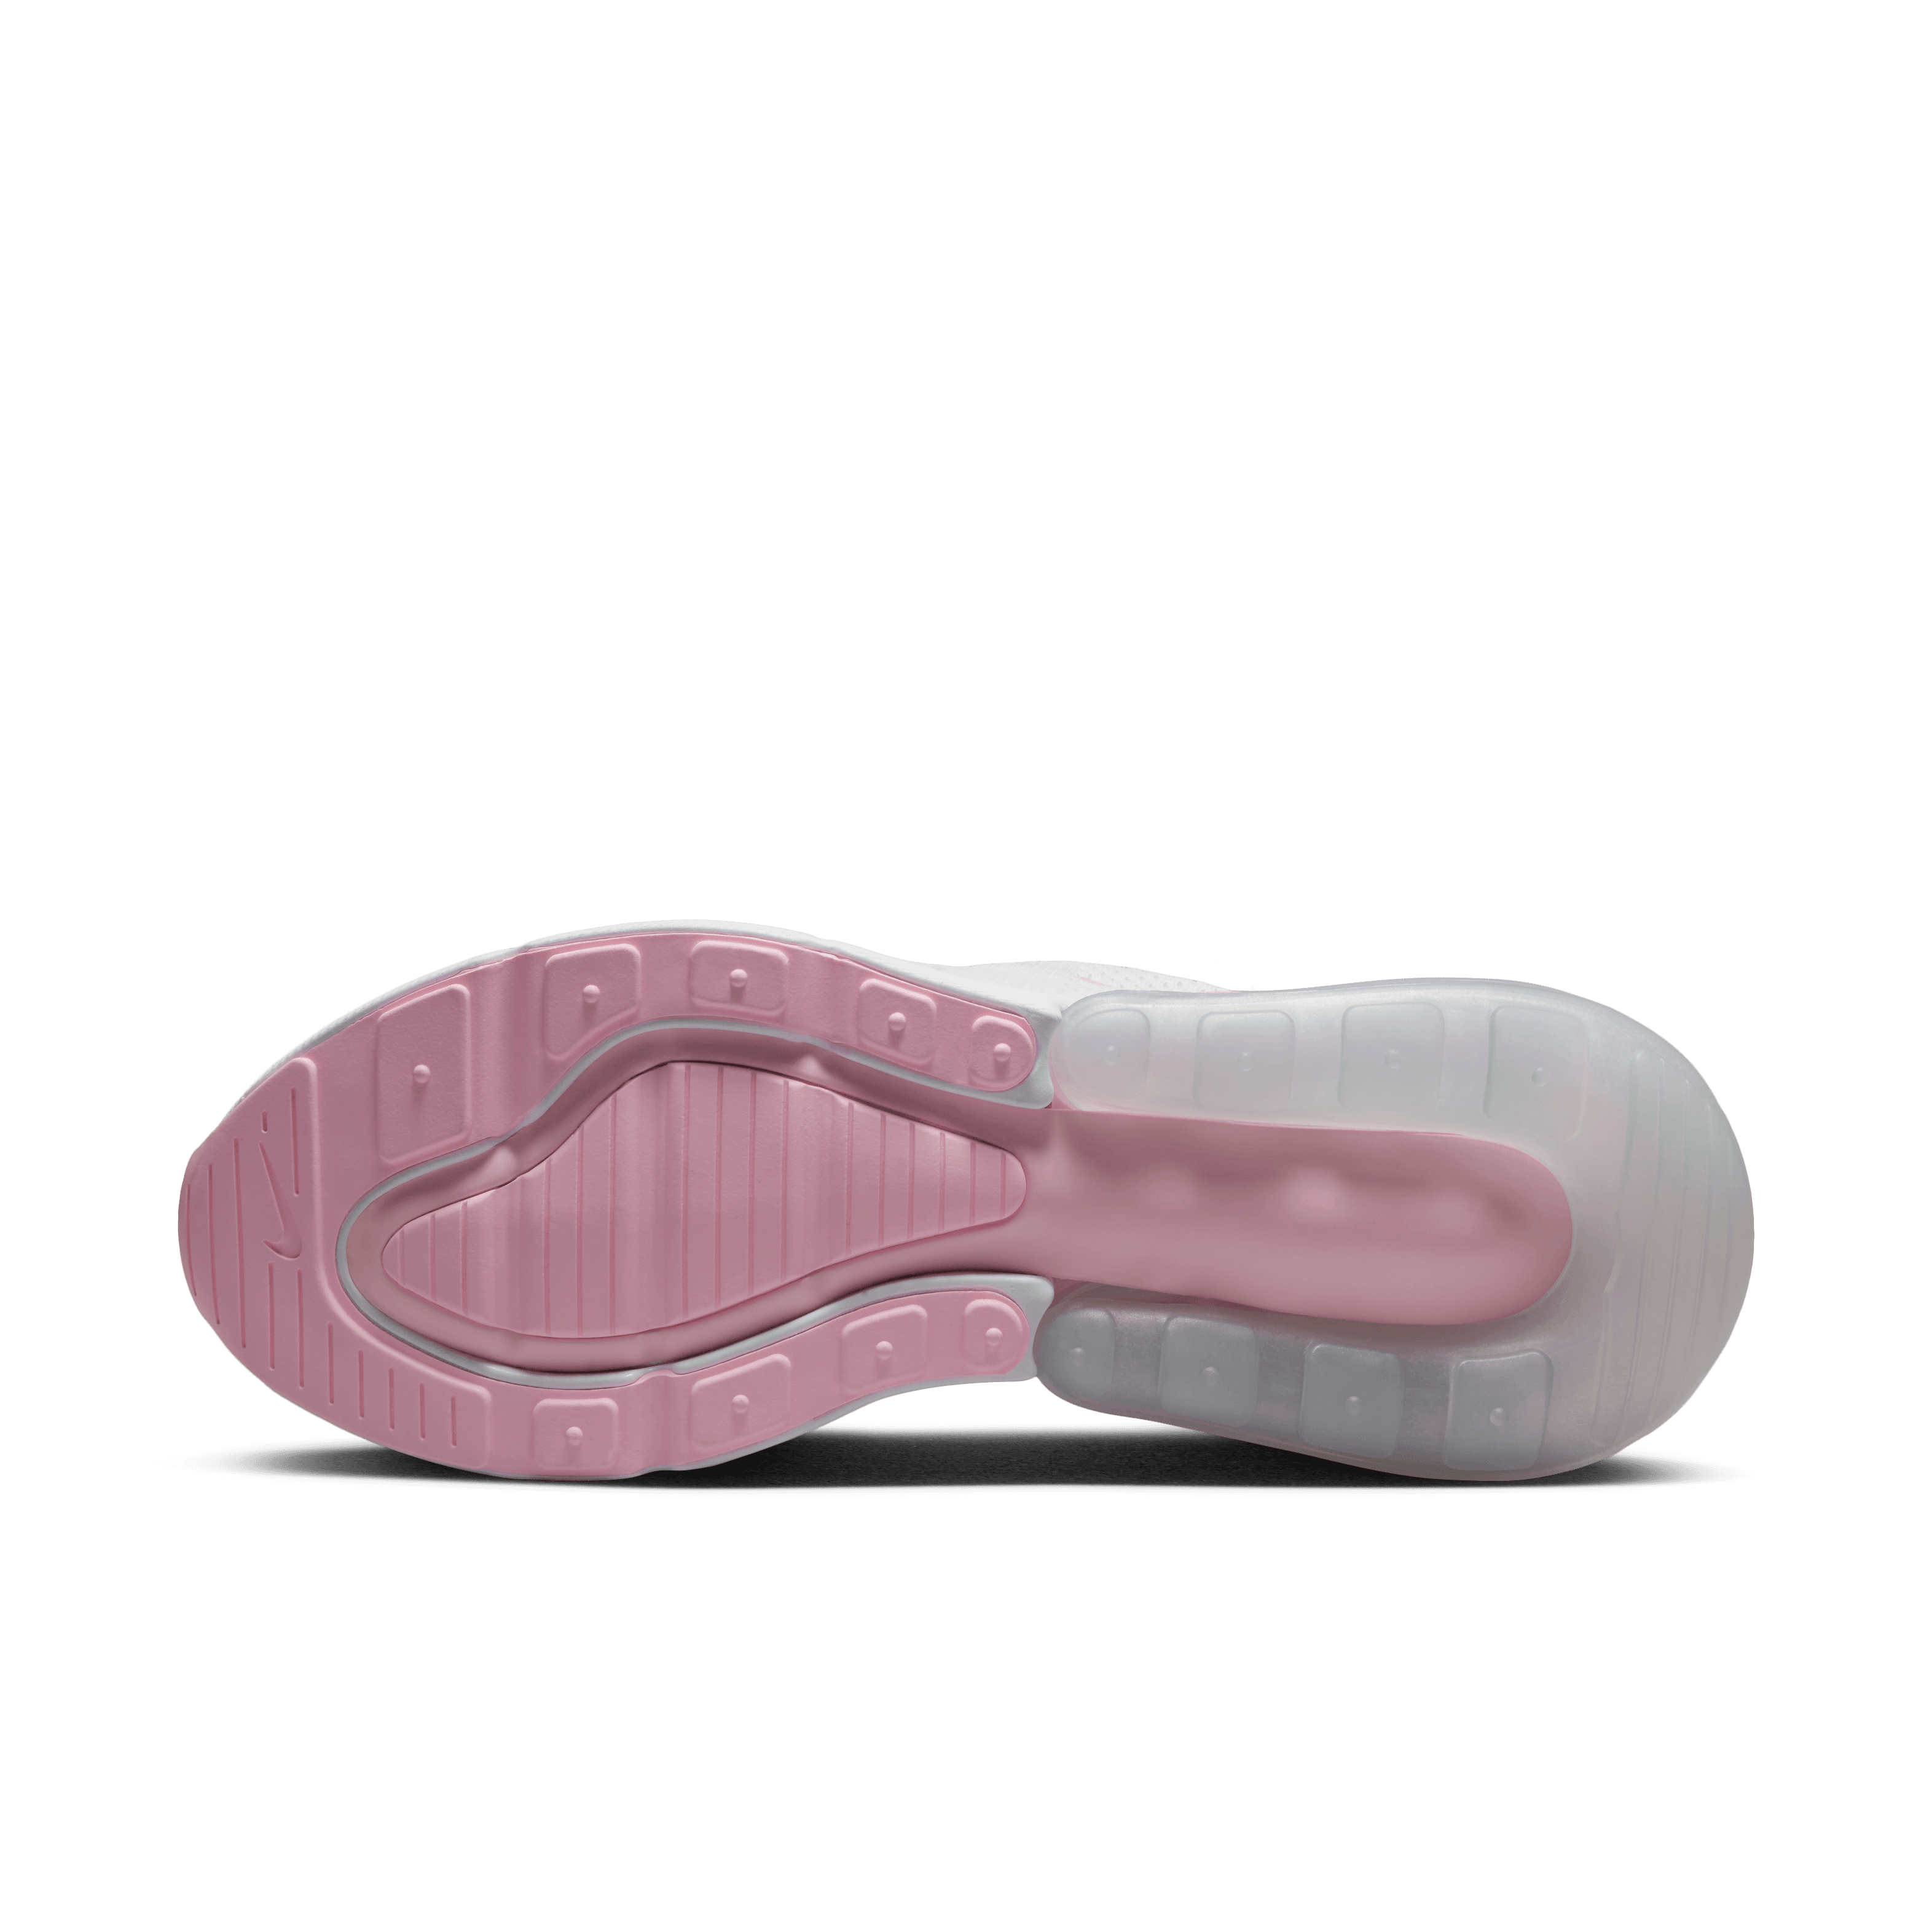 nike-womens-air-max-270-white-soft-pink-shoes-fj4575-100